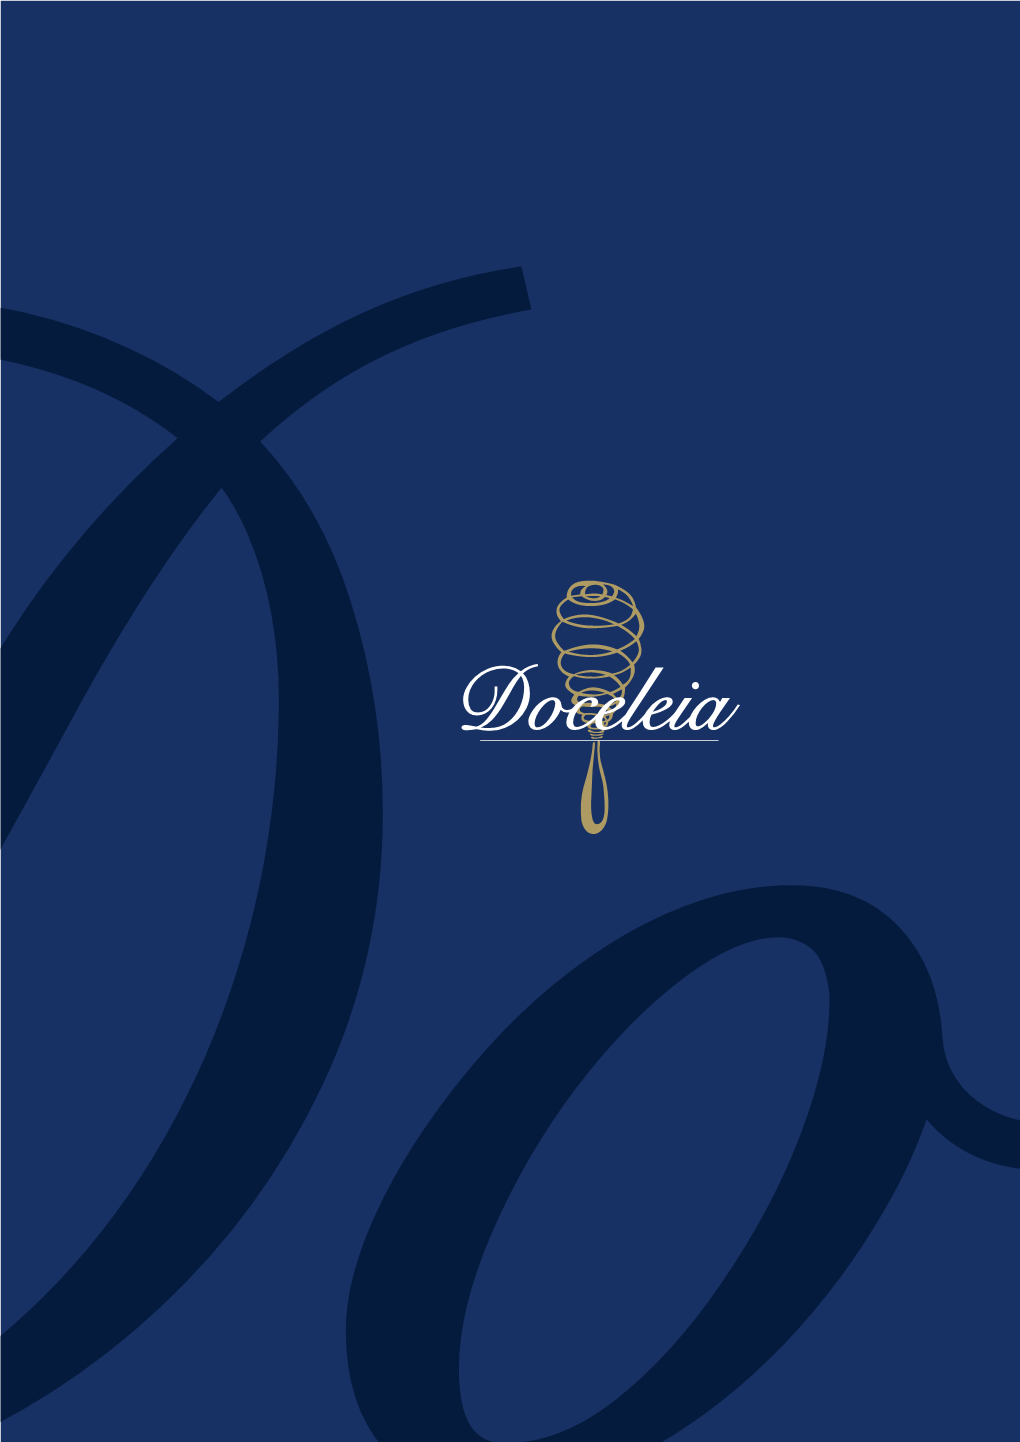 Catalogo Doceleia 2014.Pdf